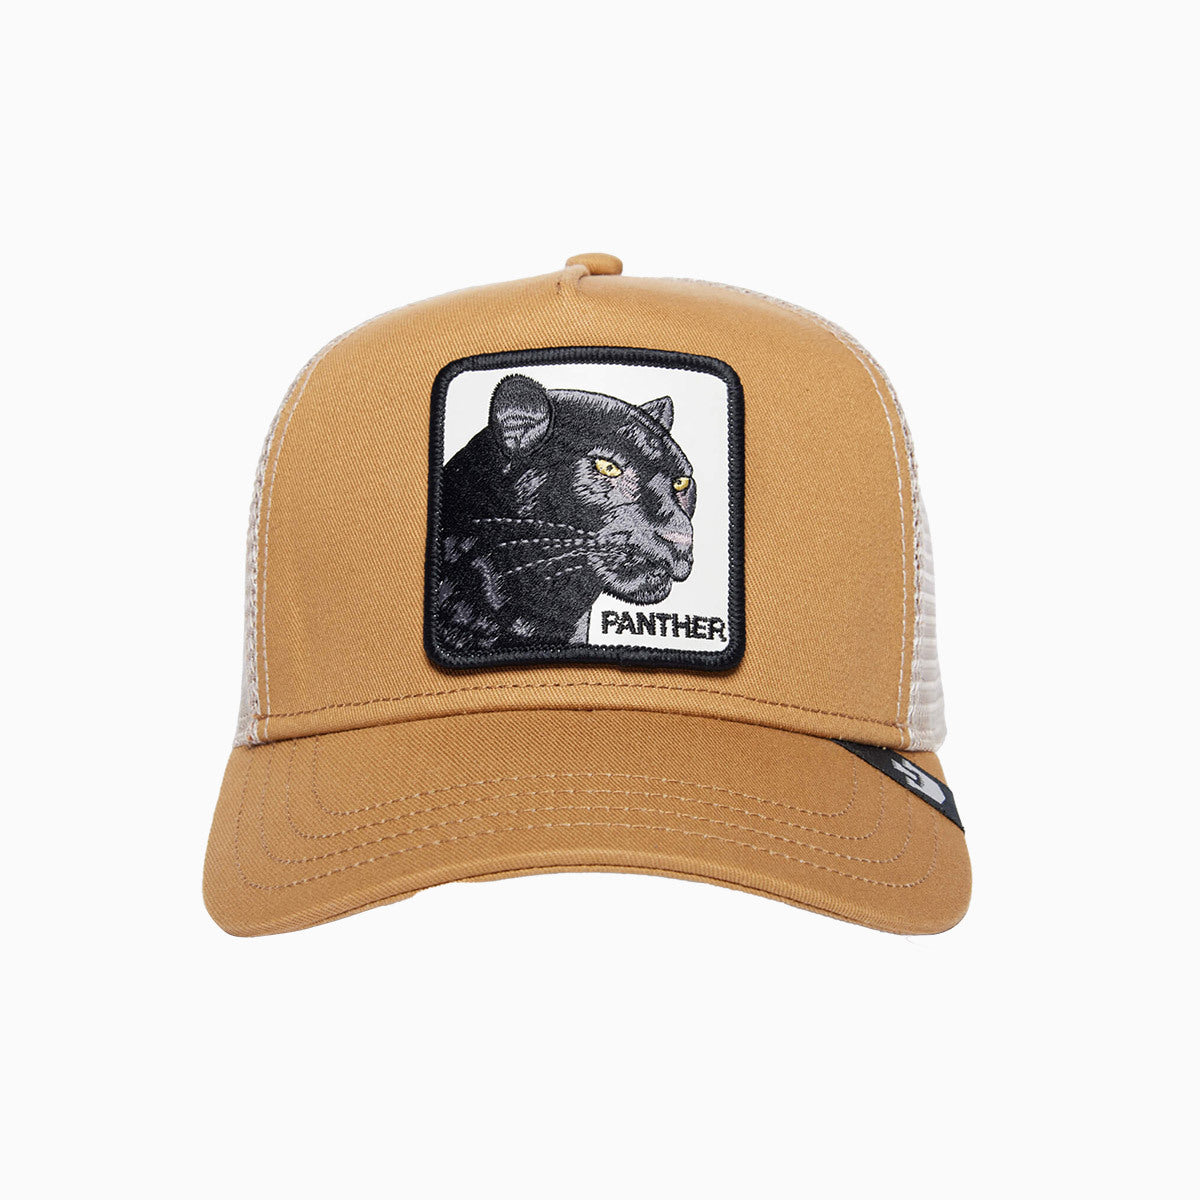 goorin-bros-the-panther-trucker-hat-101-0381-tau